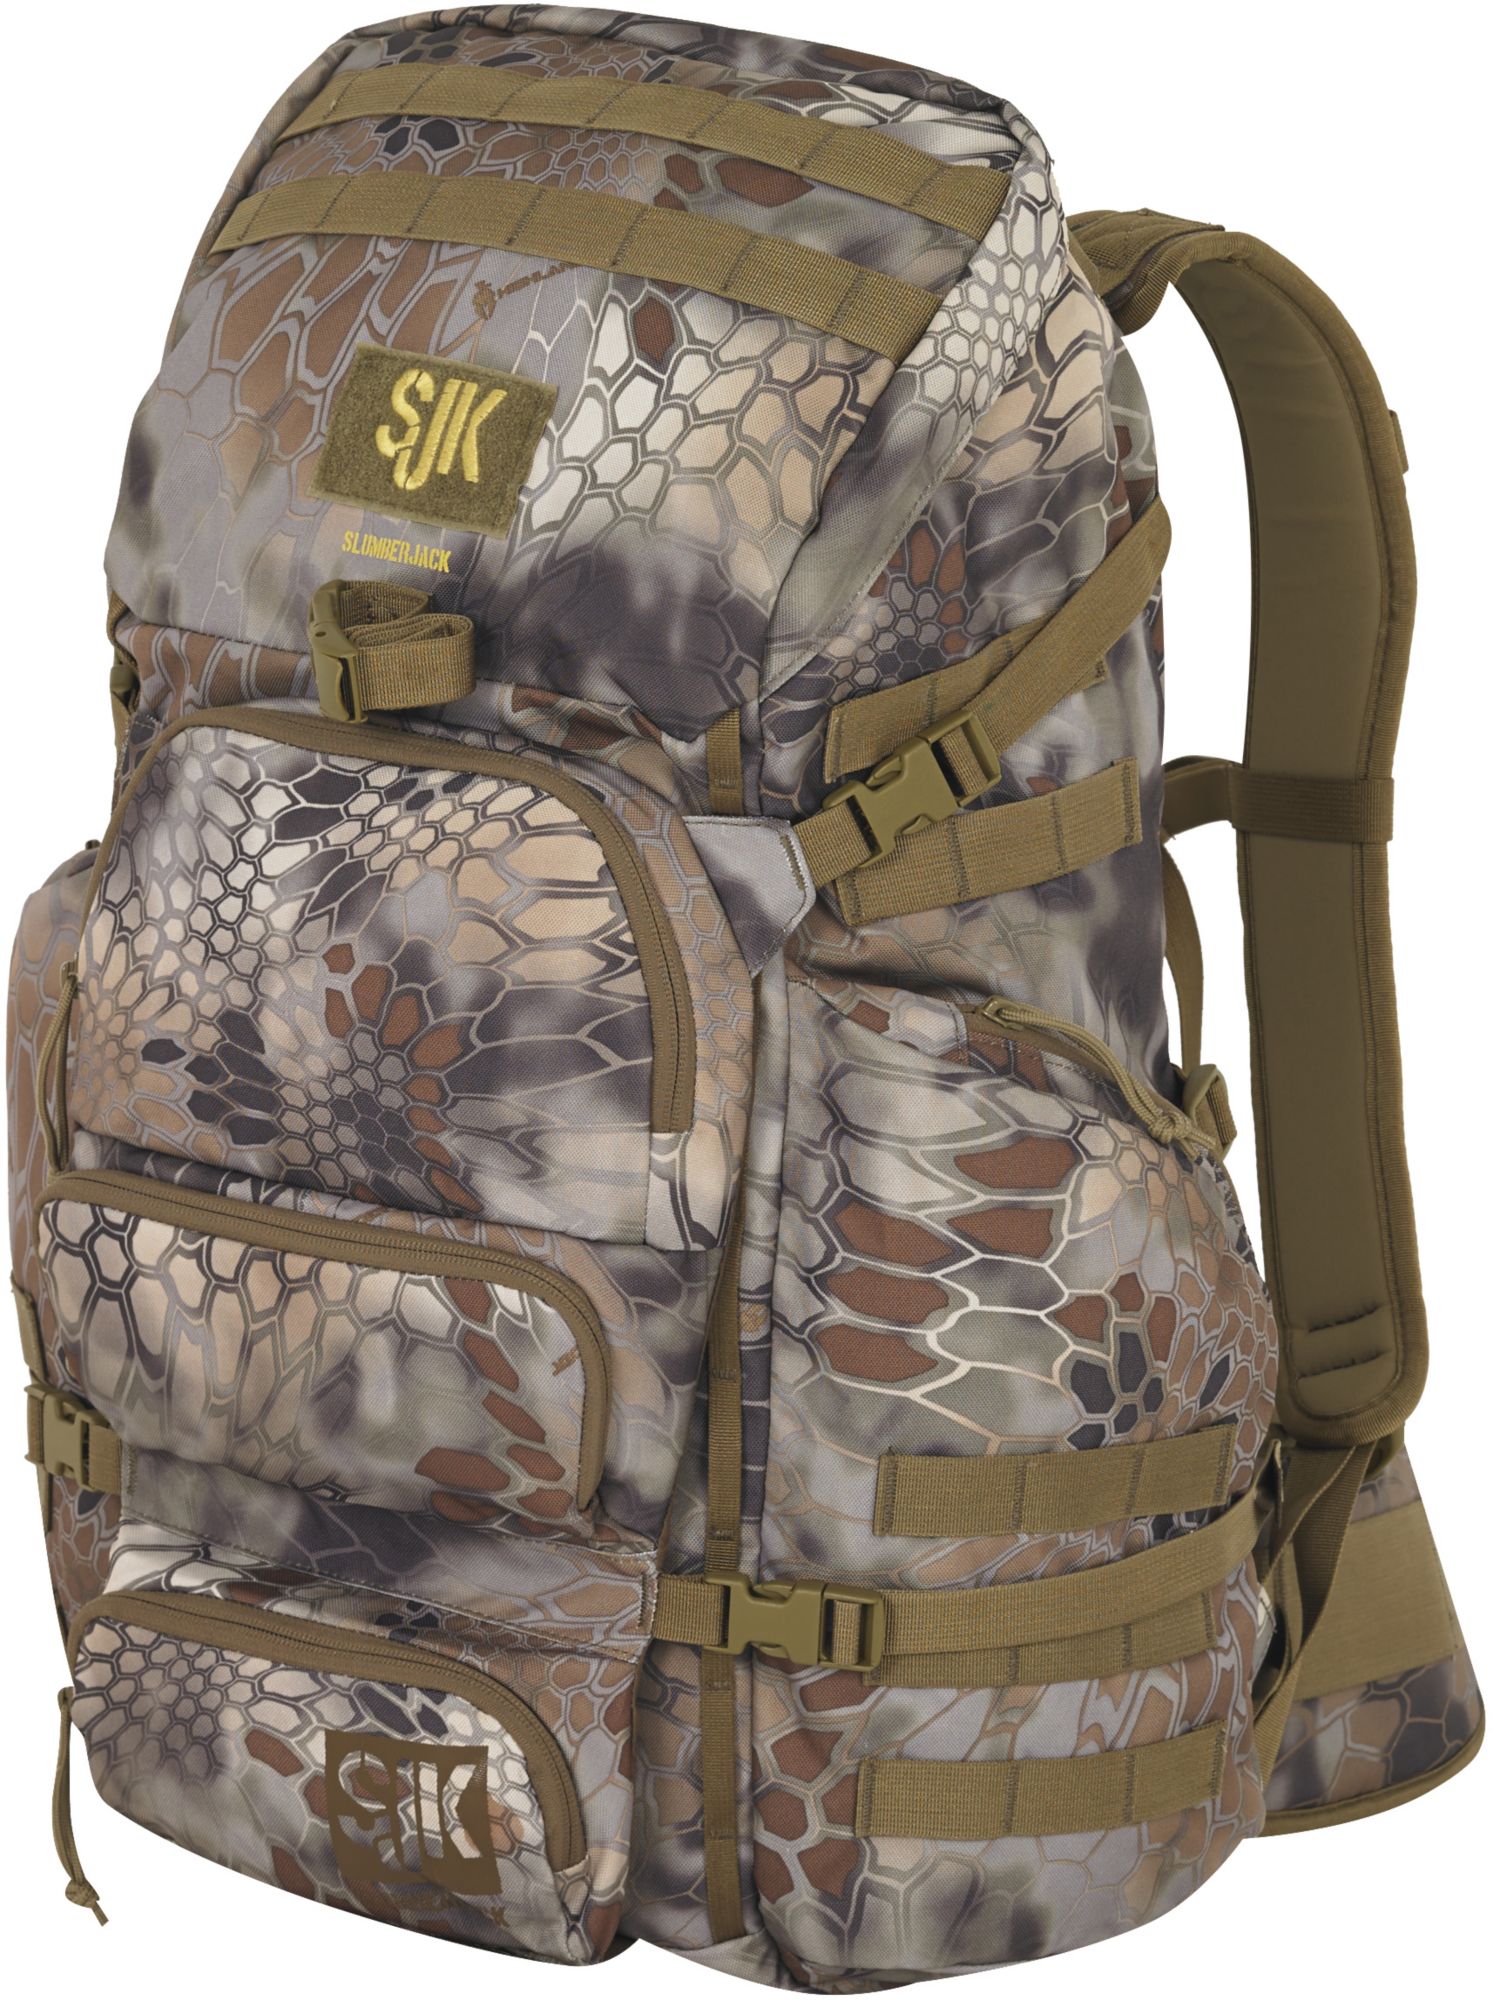 Slumberjack Strider Multi-Use Lightweight Hunting Outdoors Backpack Day Pack 